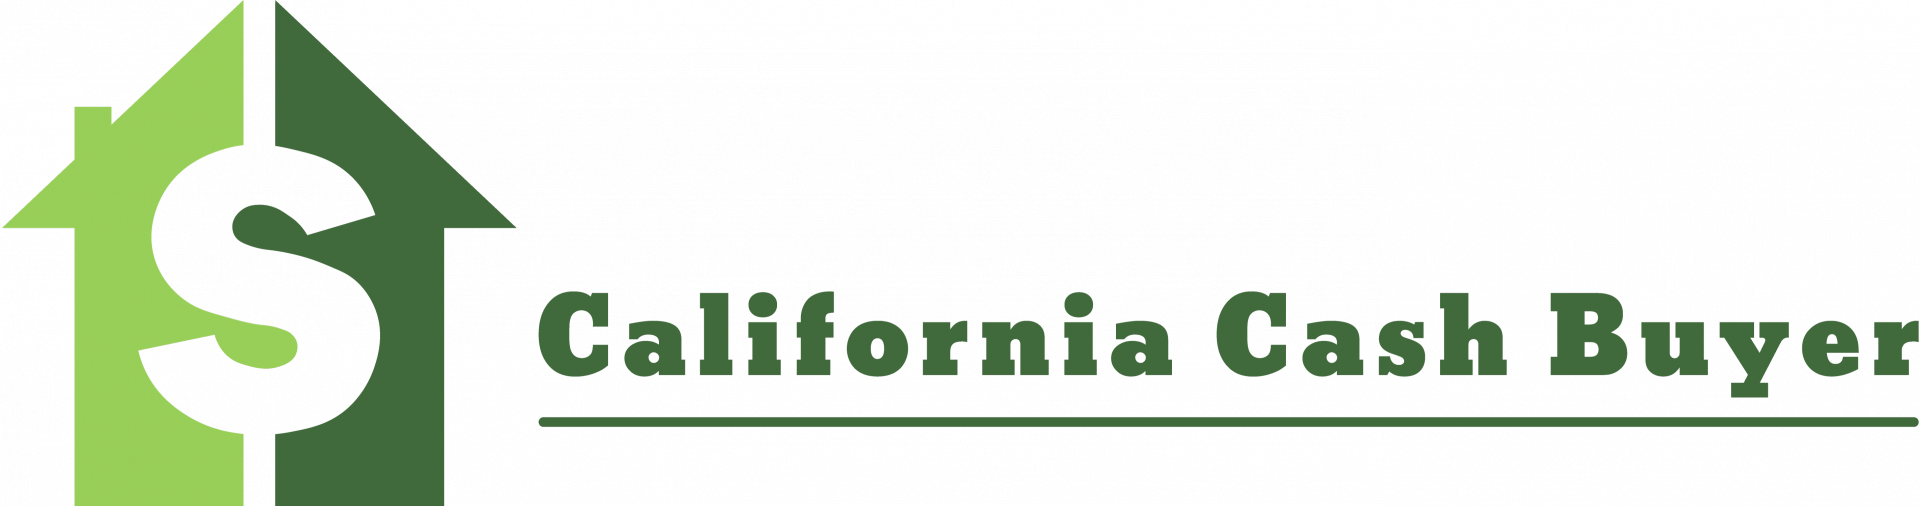 California Cash Buyer logo